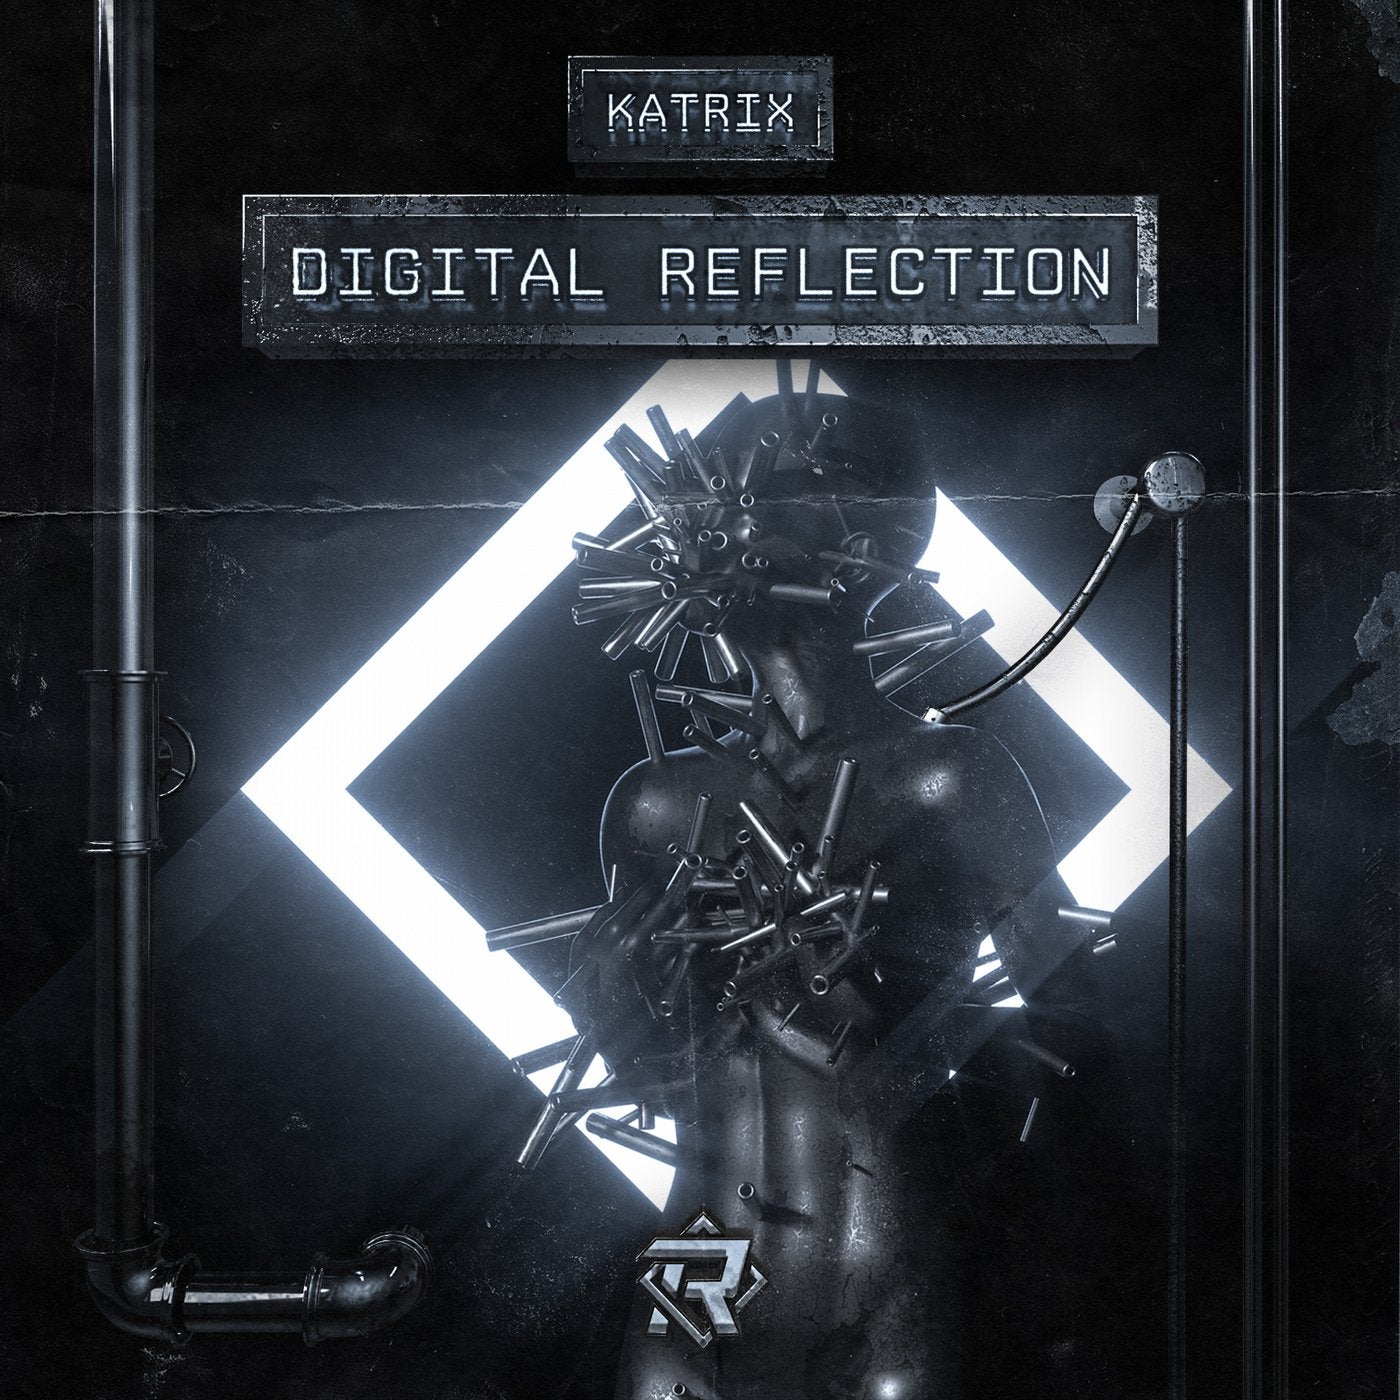 Digital Reflection